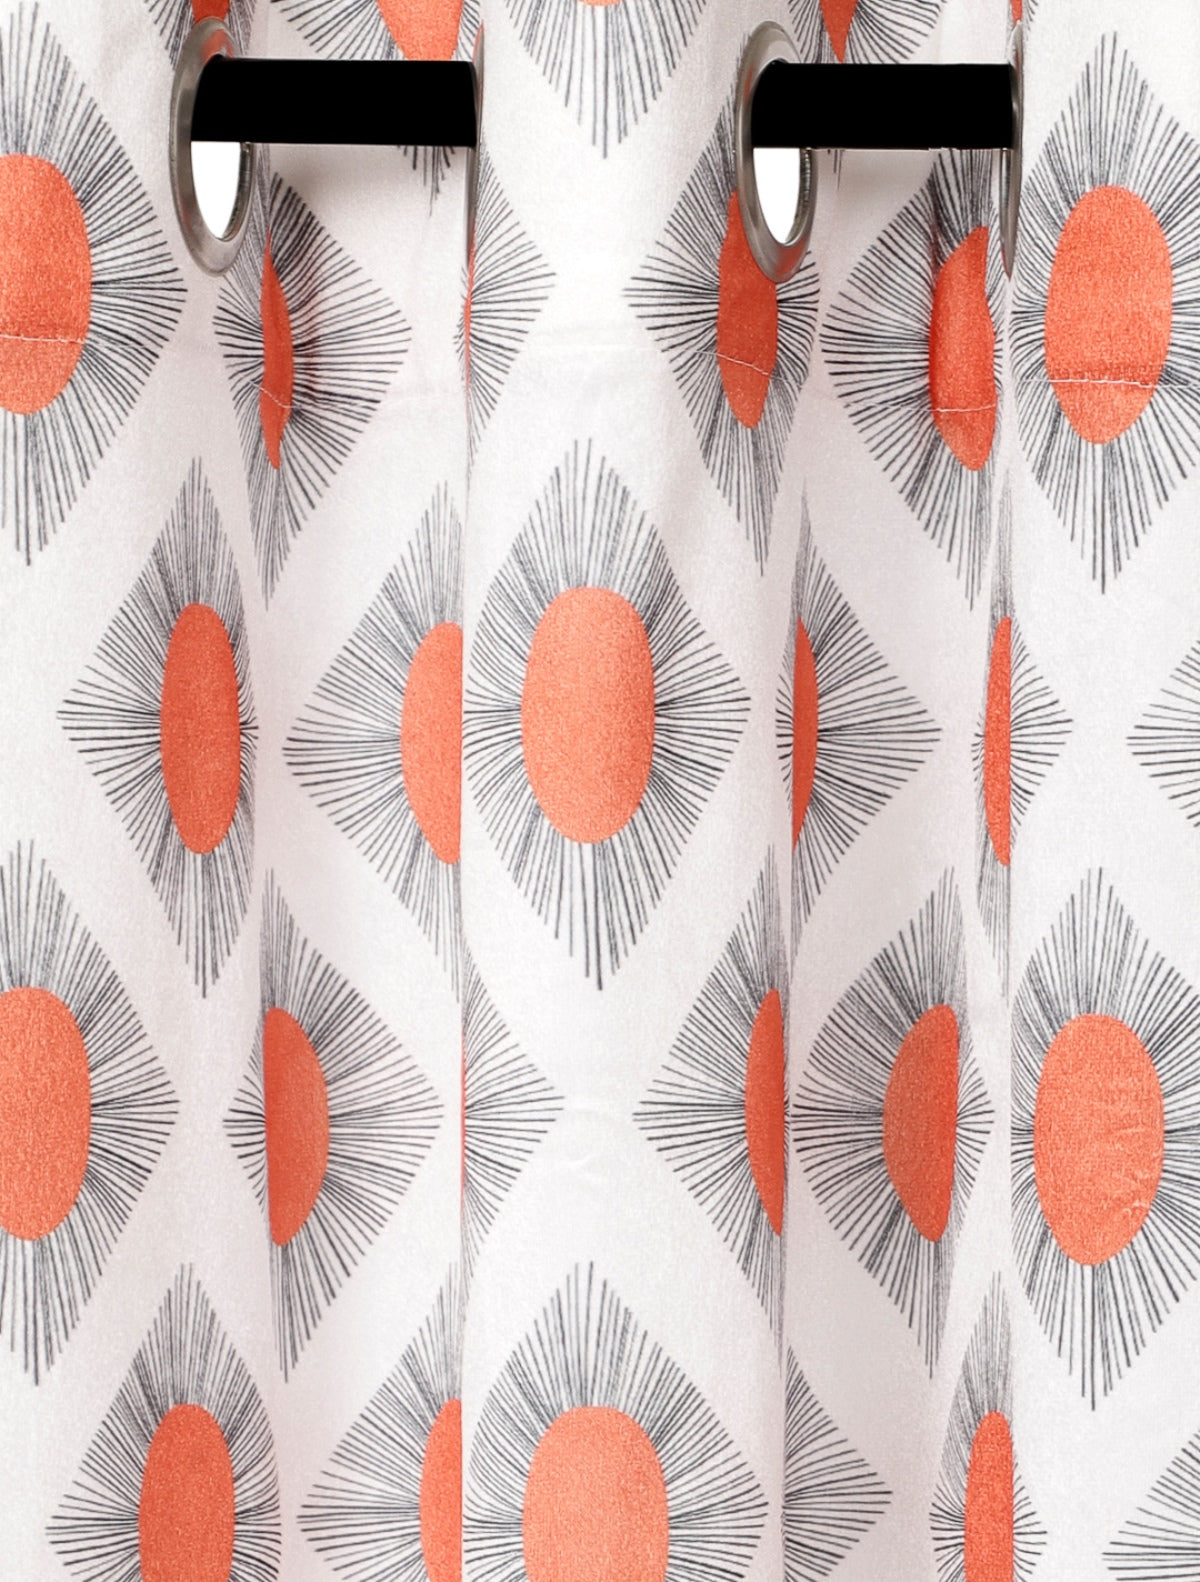 Romee Orange & Off White Ethnic Motifs Patterned Set of 1 Door Curtains